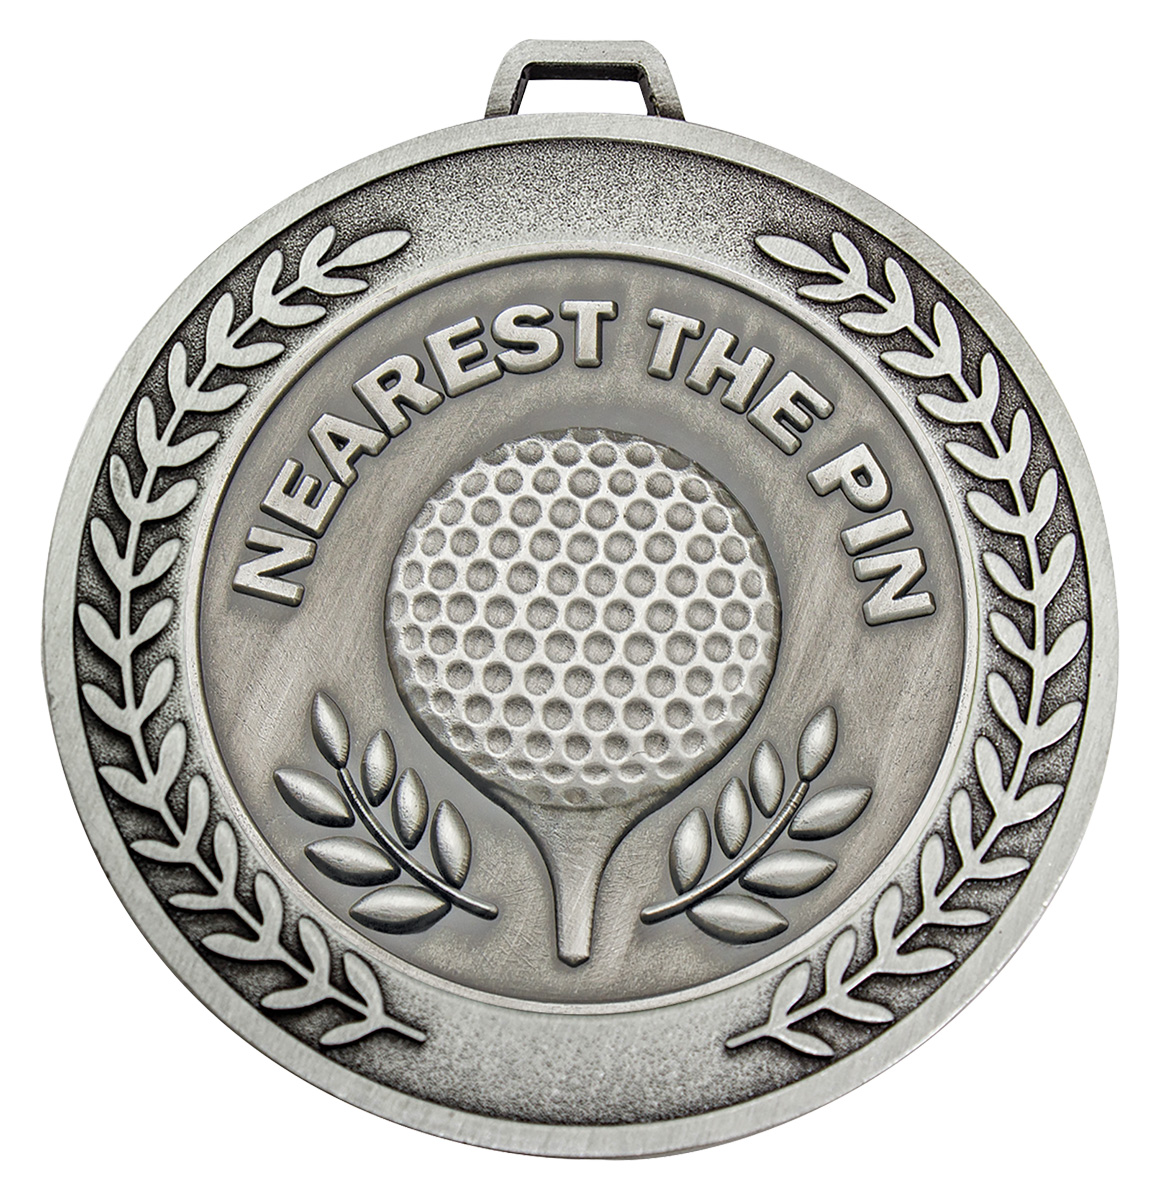 Prestige Nearest the Pin Gold Golf Medal 70mm